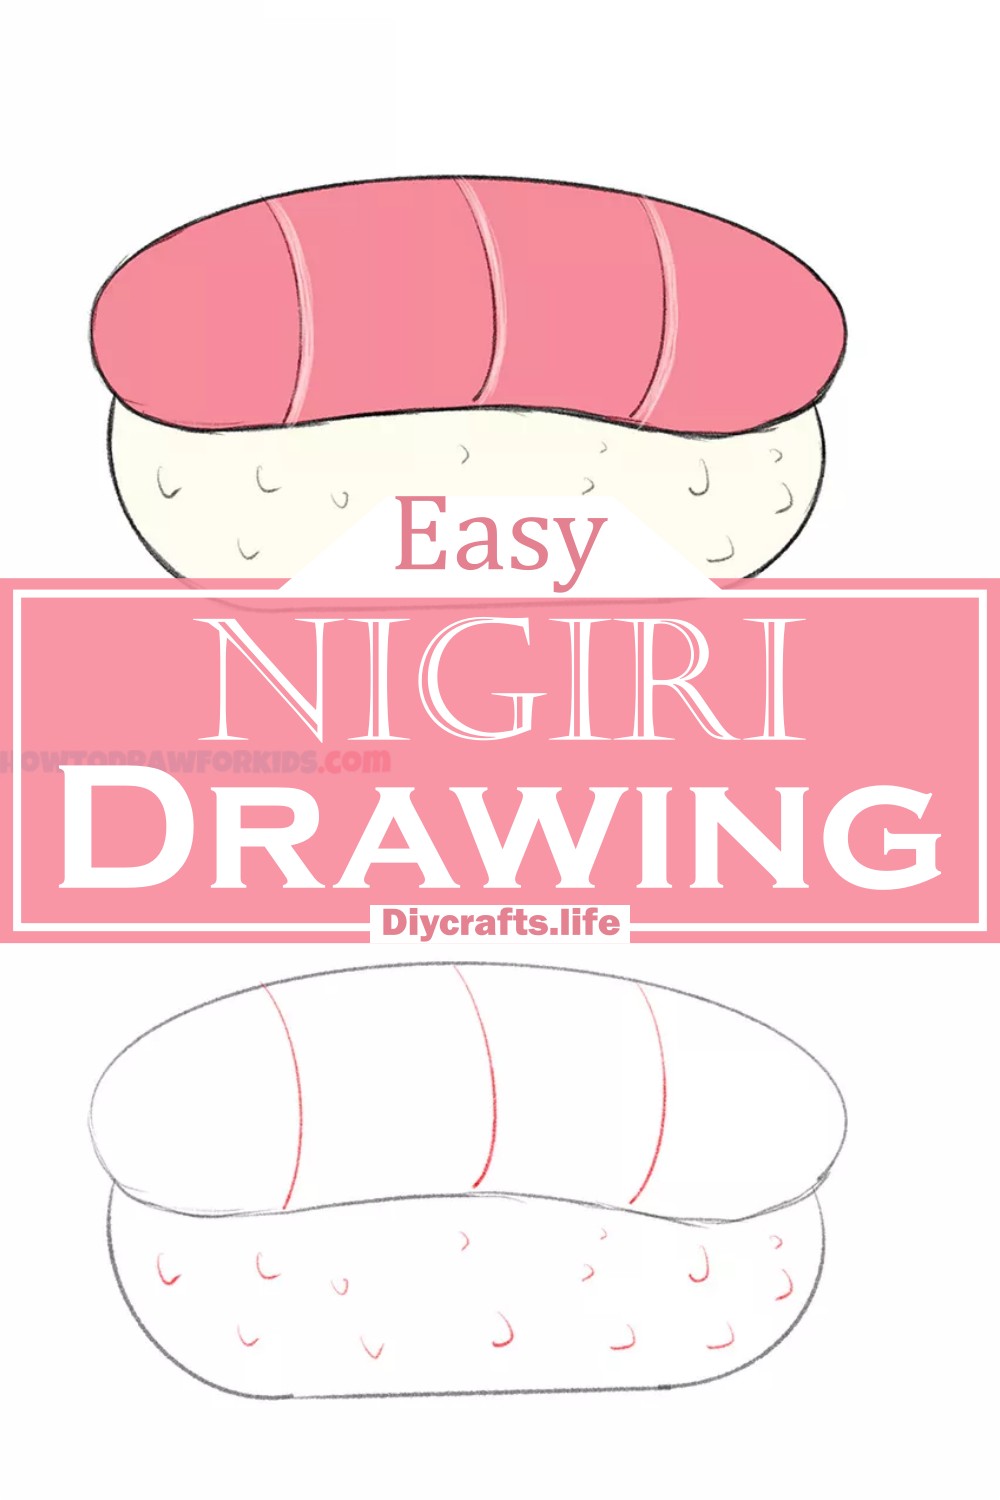 Easy Nigiri Drawing